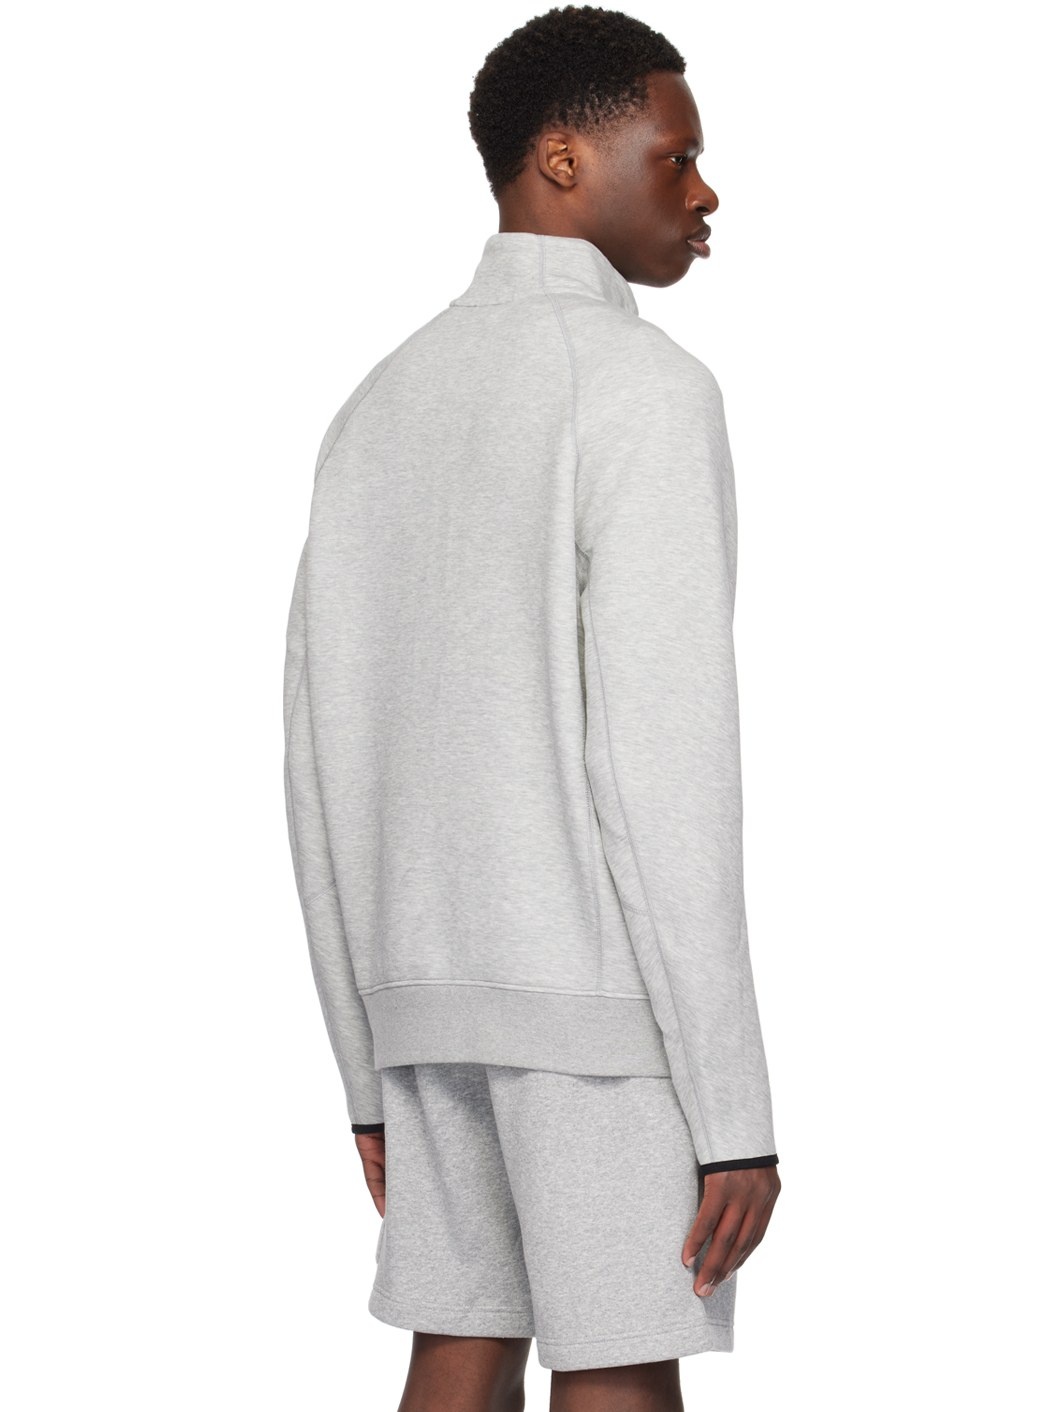 Gray Lightweight Sweater - 3